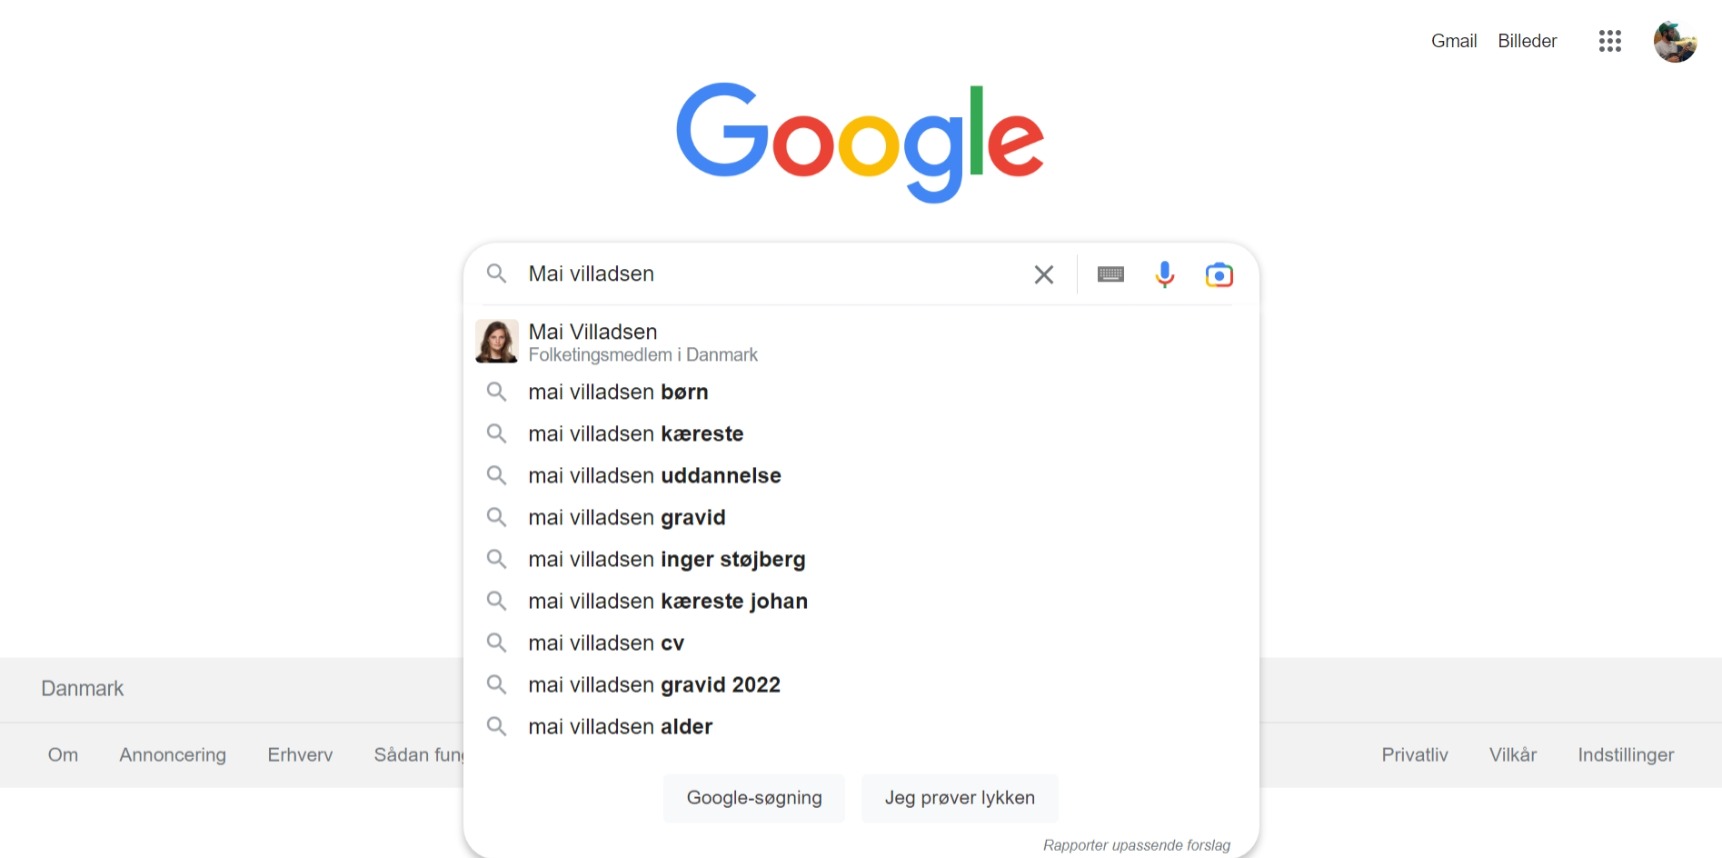 Danish politician Mai Villadsens Google Search Engine suggestions